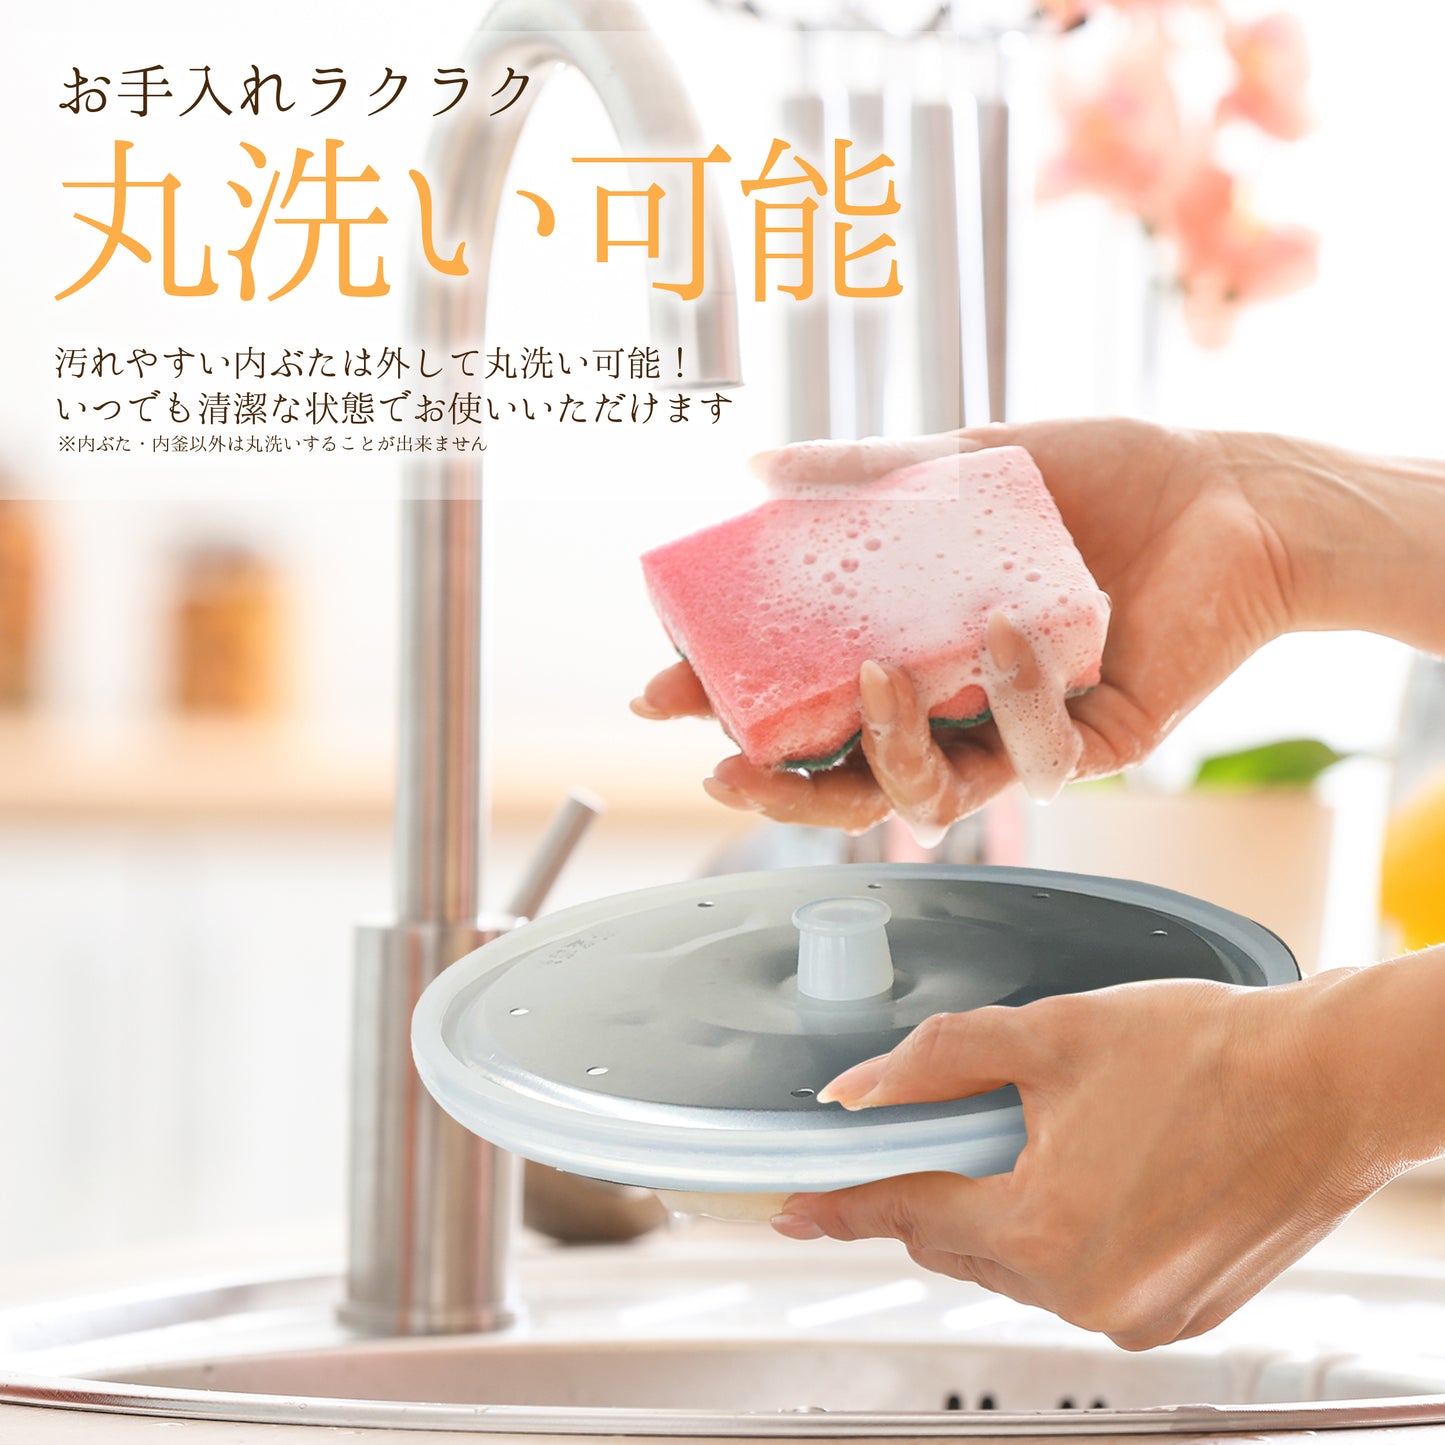 【applife】マイコン式3合炊飯器